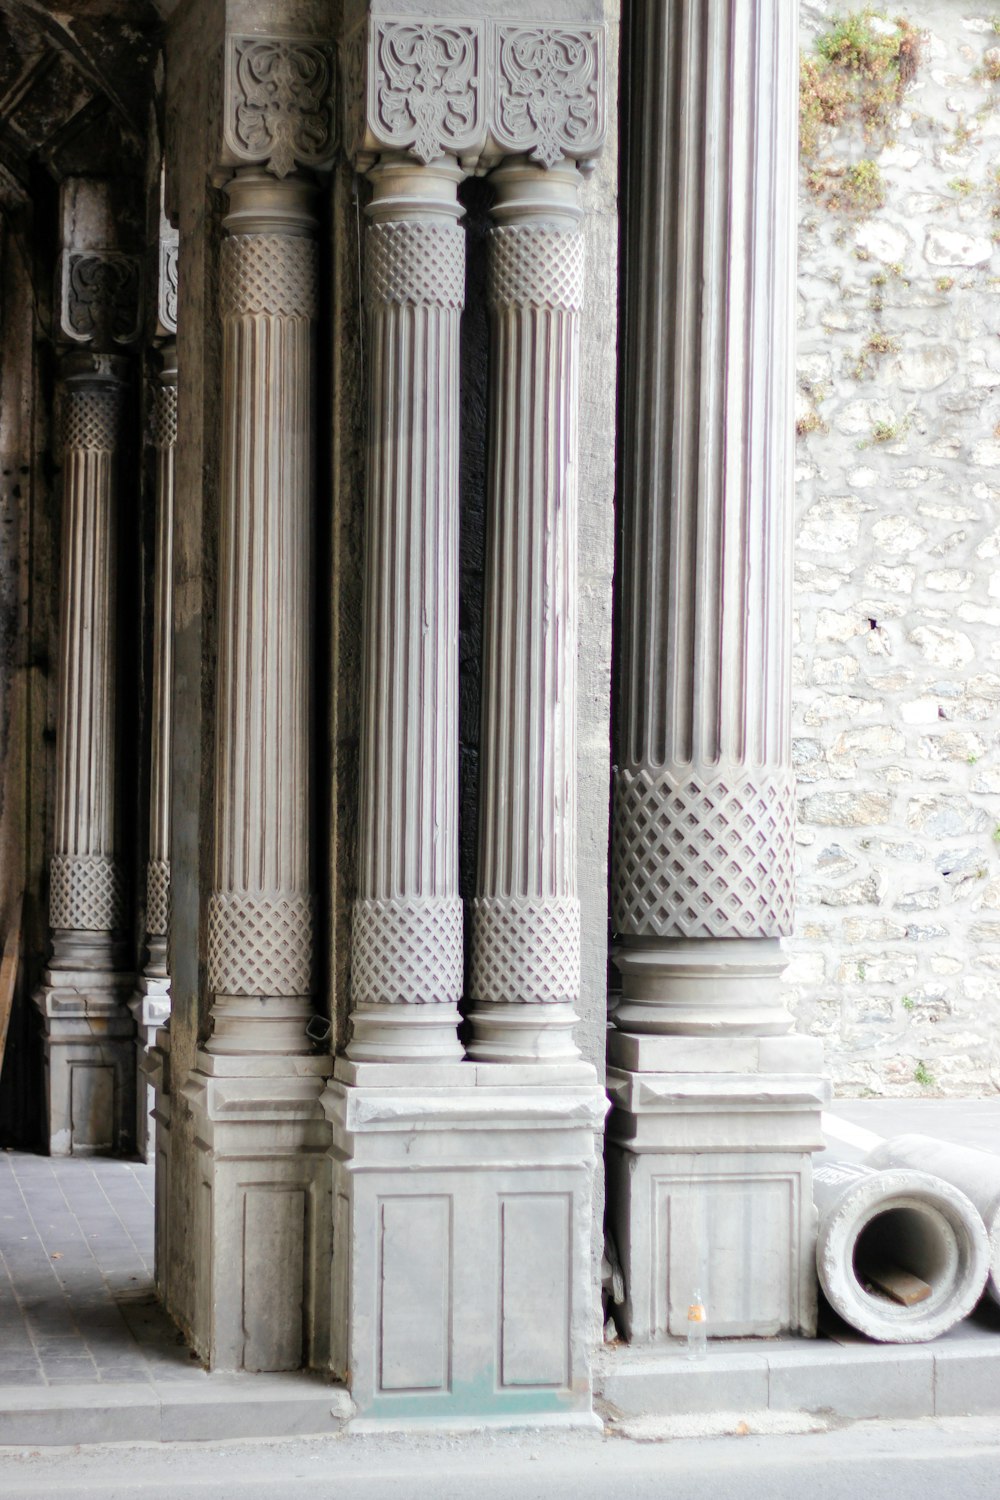 a row of pillars